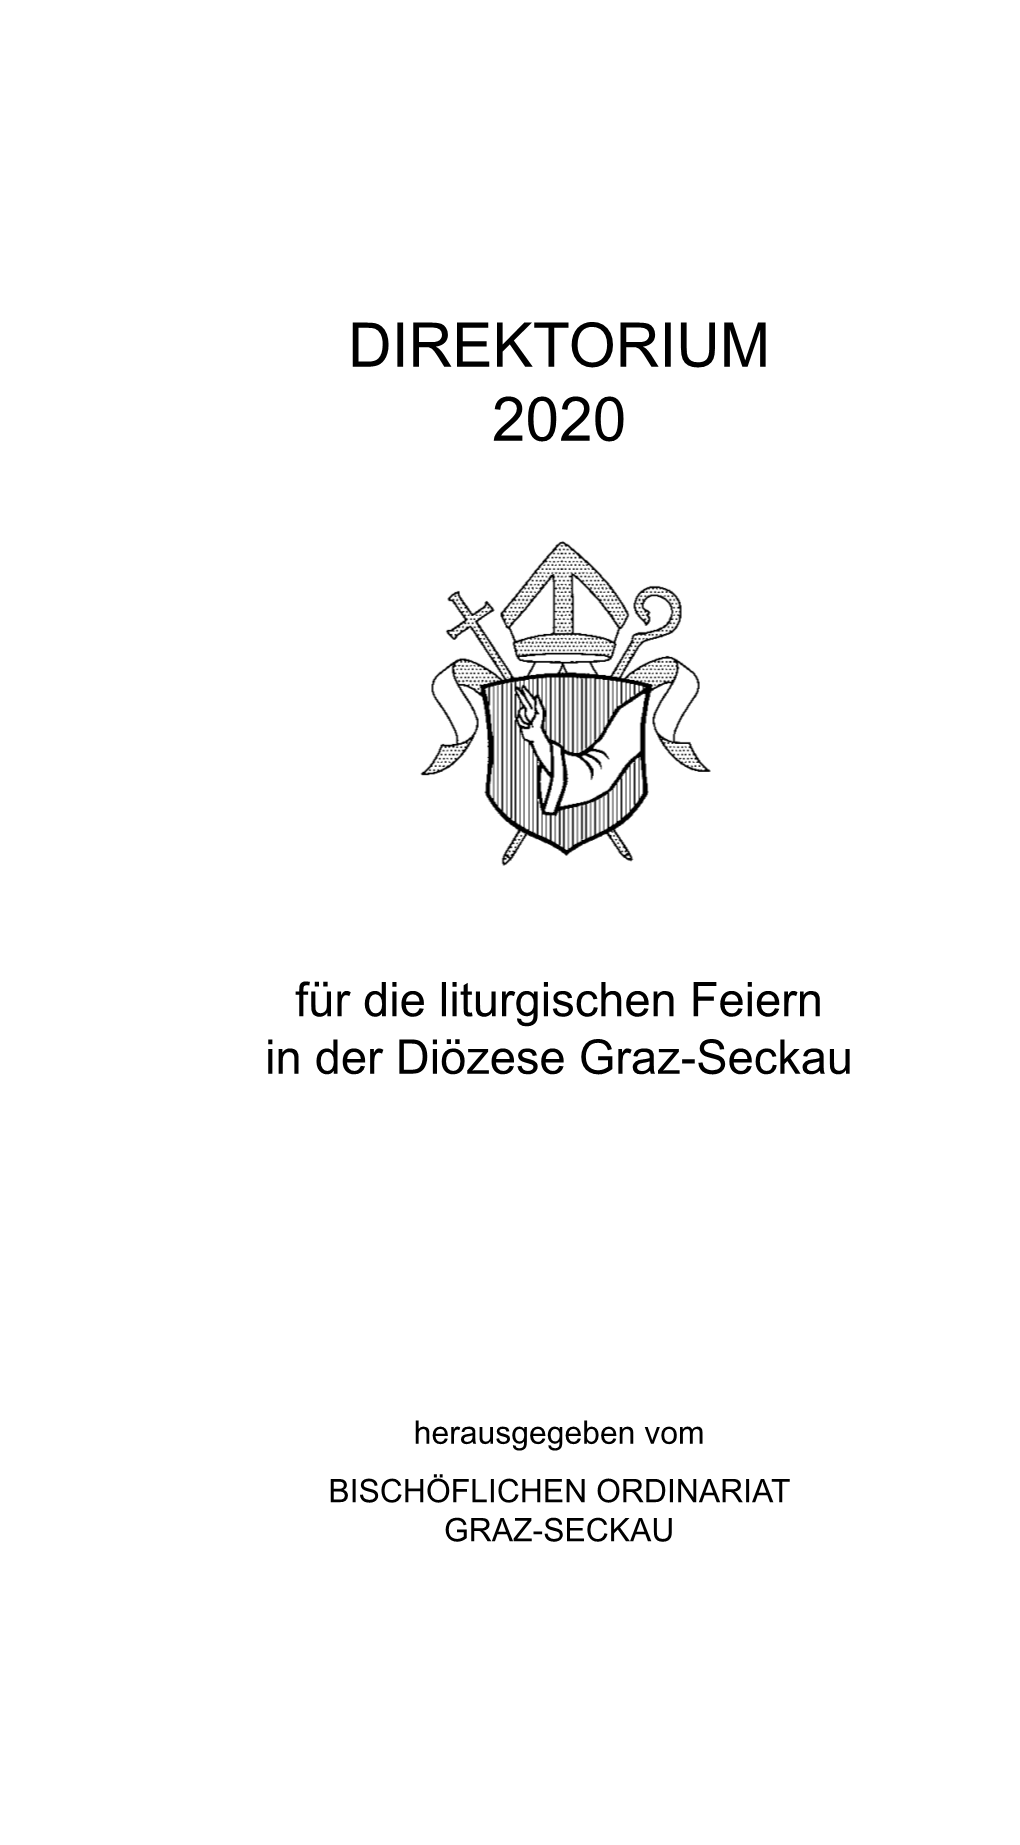 Liturgisches Direktorium 2020